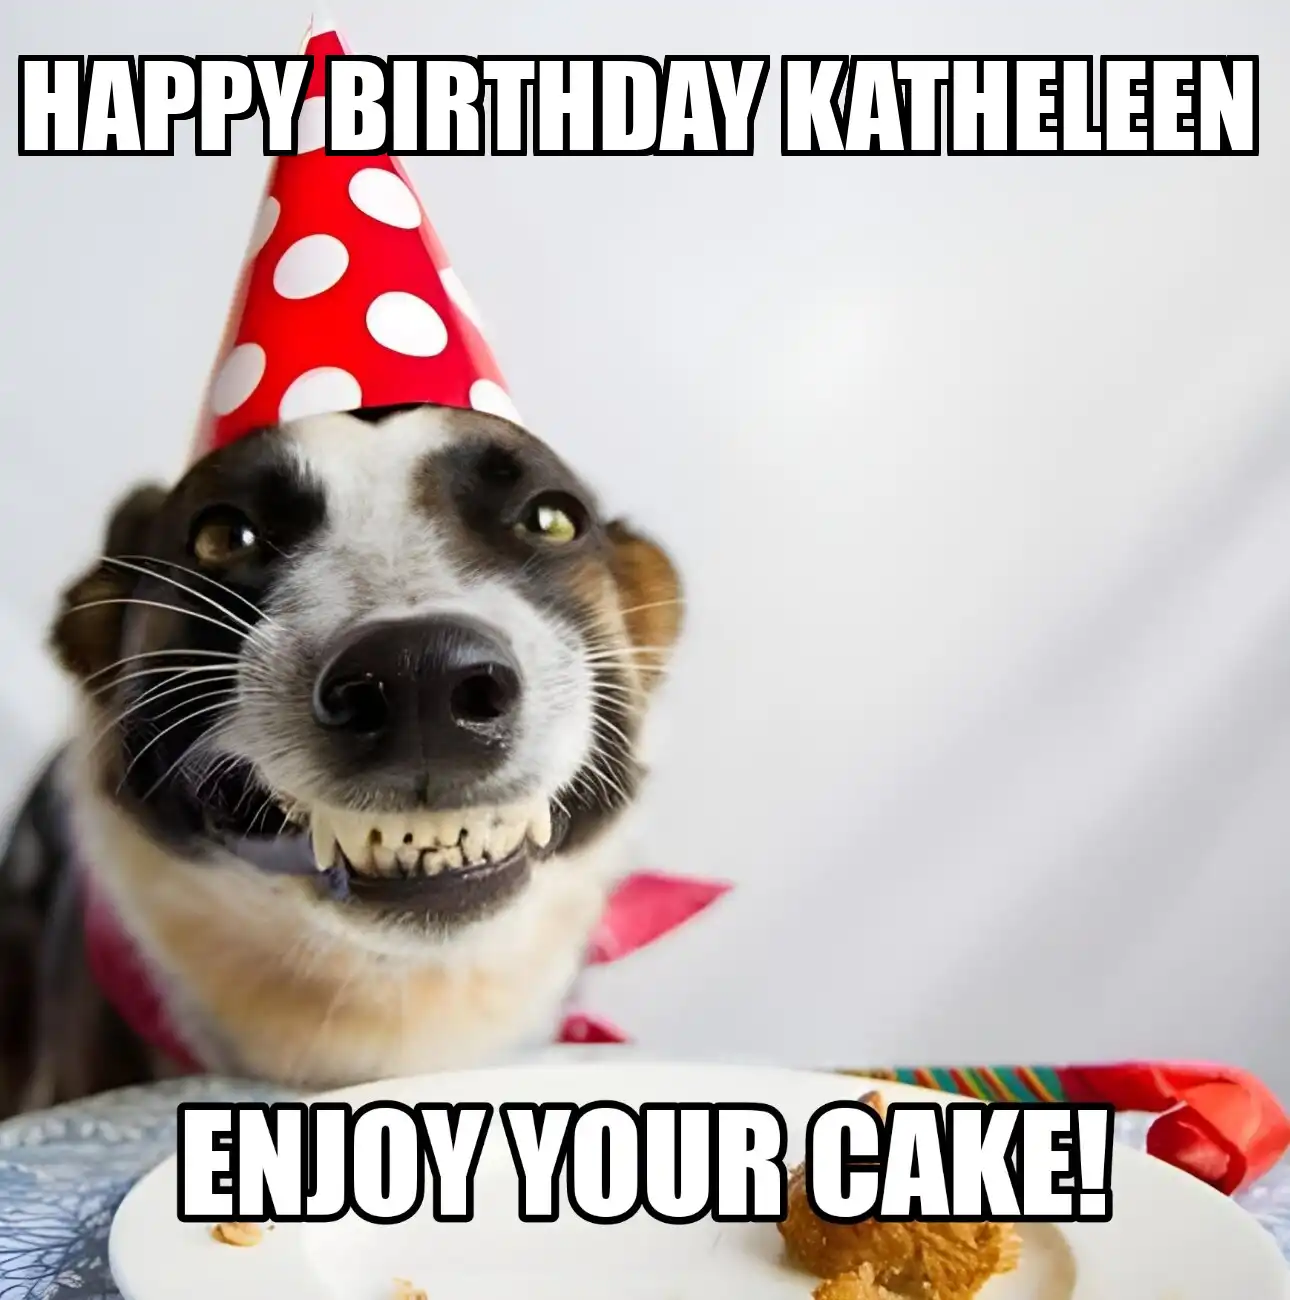 Happy Birthday Katheleen Enjoy Your Cake Dog Meme